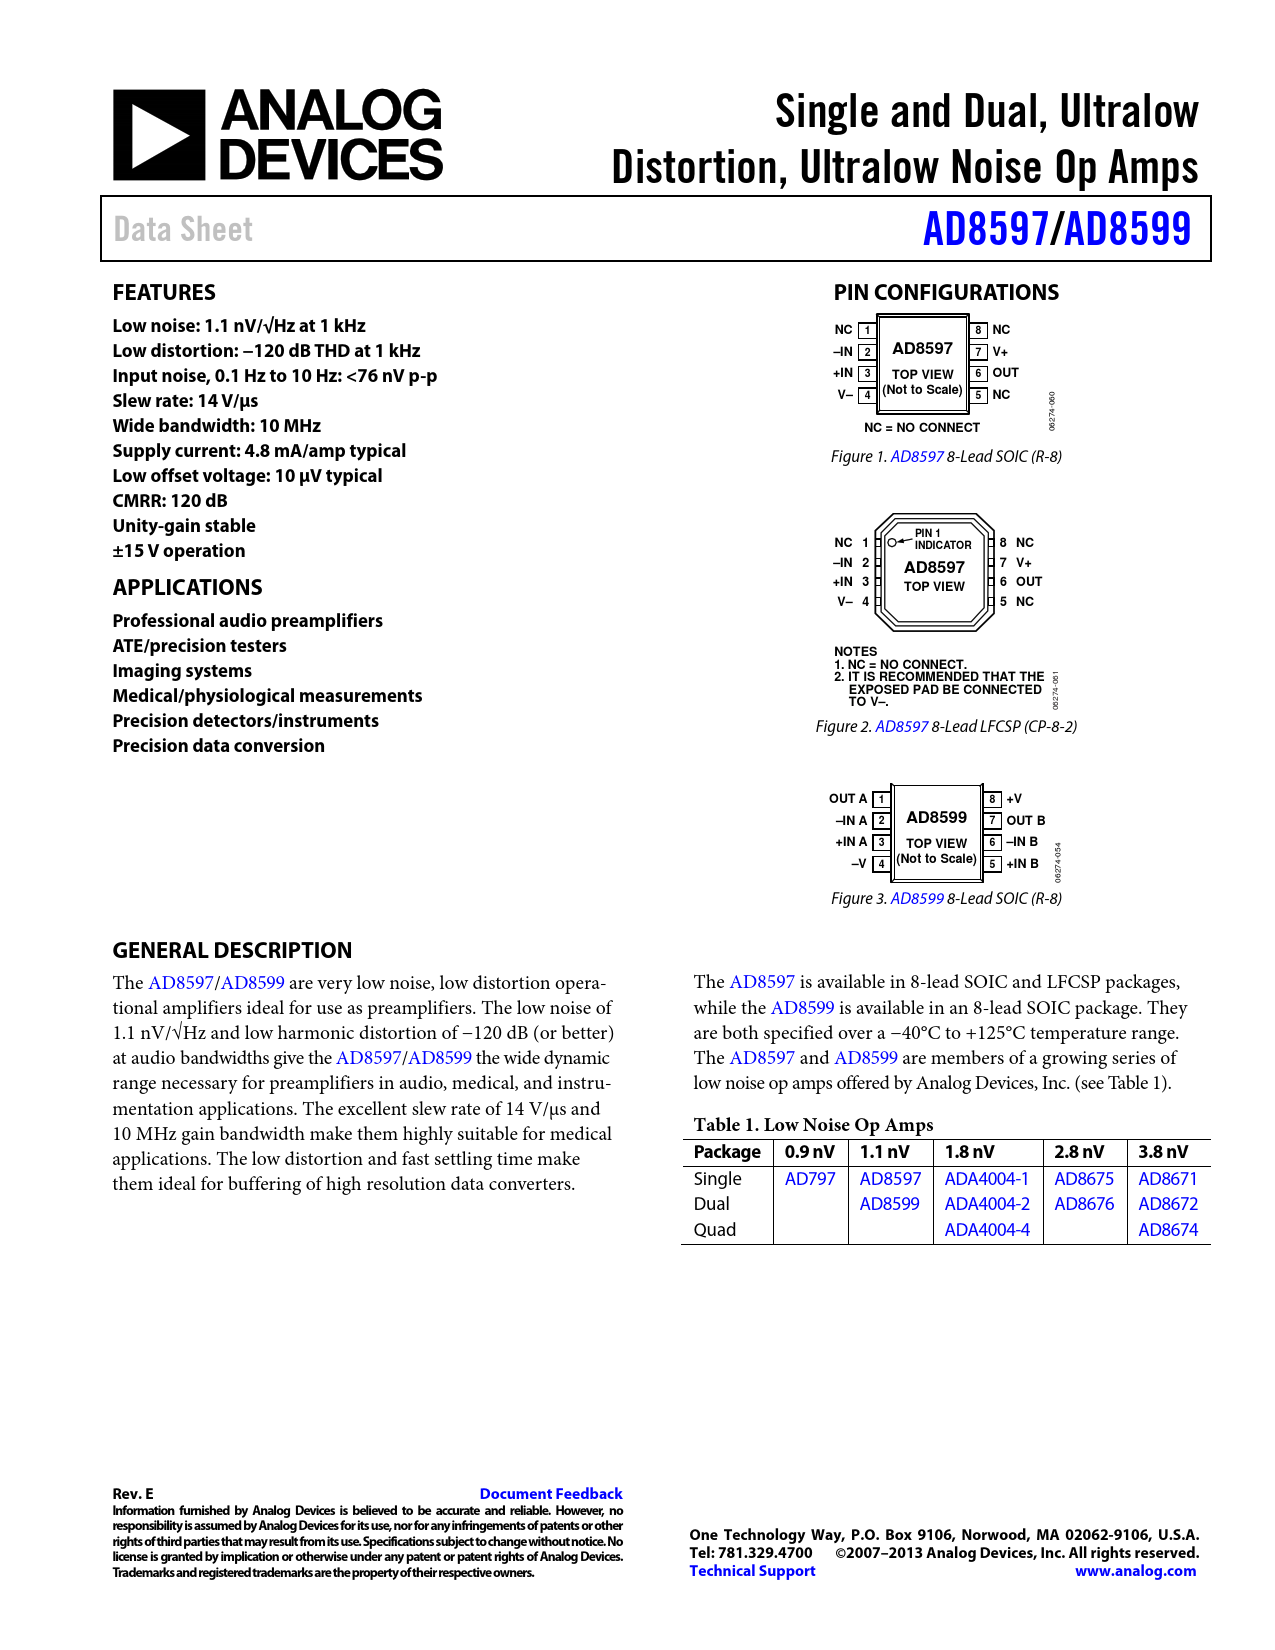 Datasheet AD8597, AD8599 Analog Devices, Версия: F